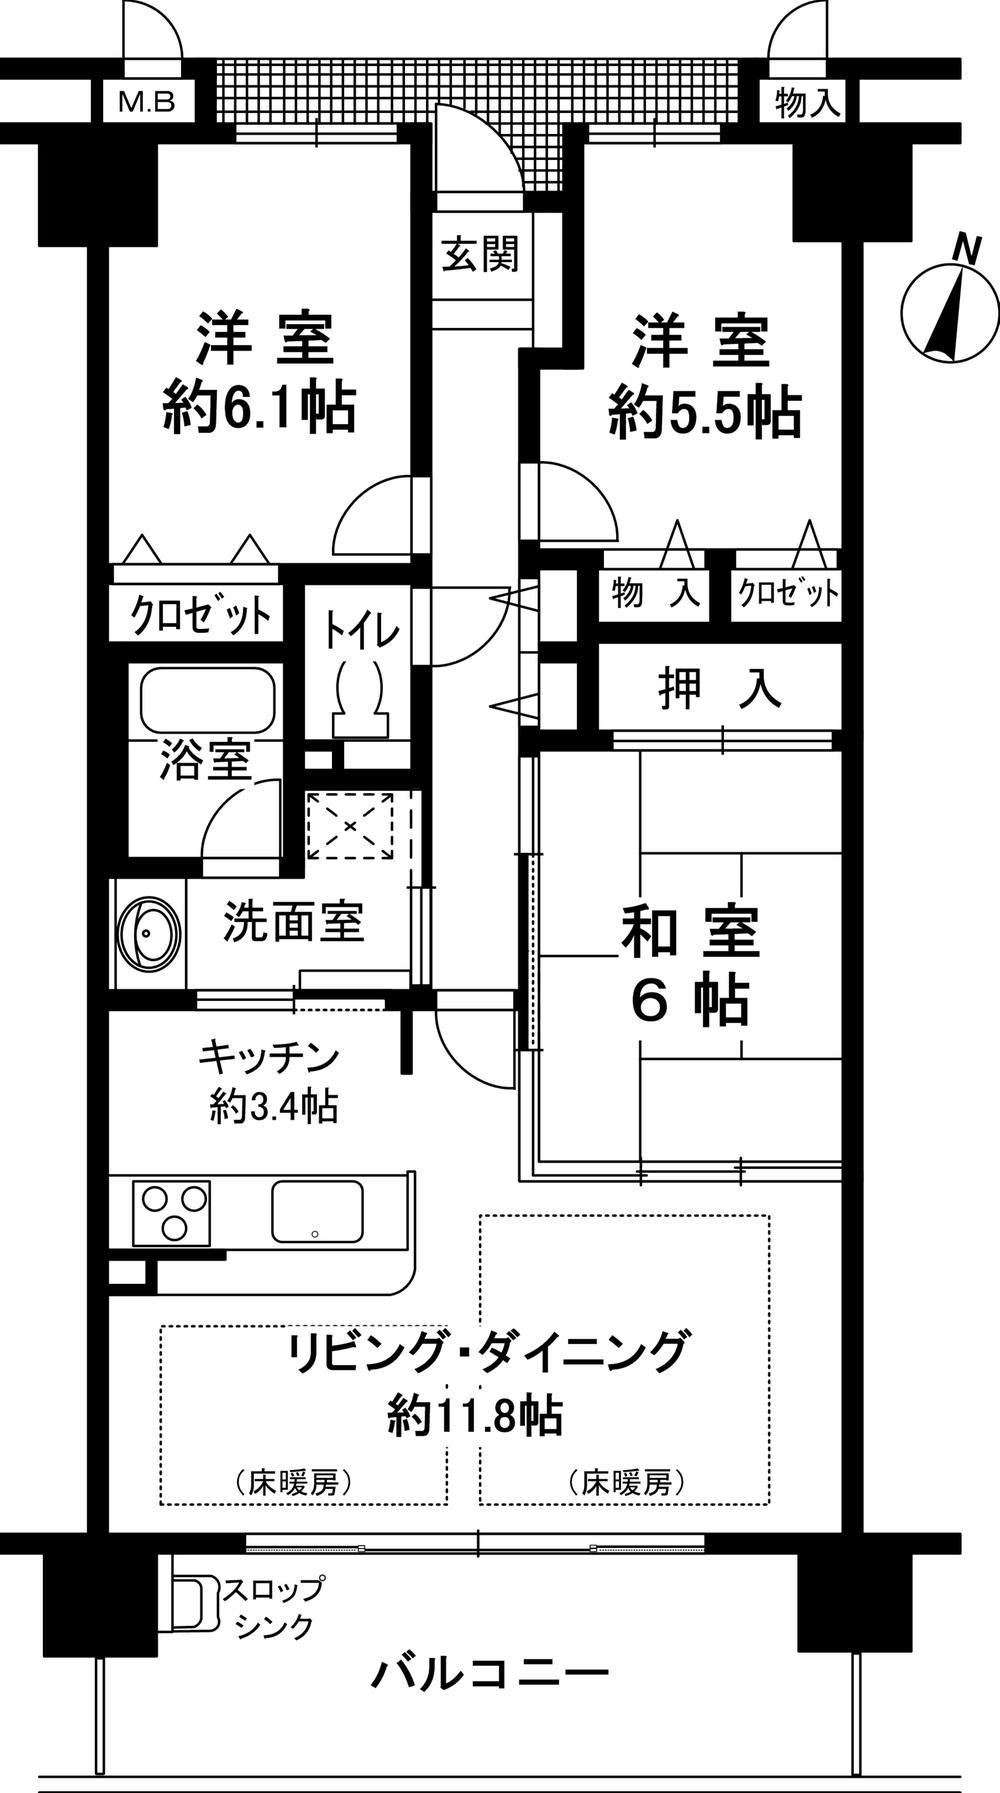 Floor plan. 3LDK, Price 19,800,000 yen, Footprint 74.4 sq m , Balcony area 12.6 sq m